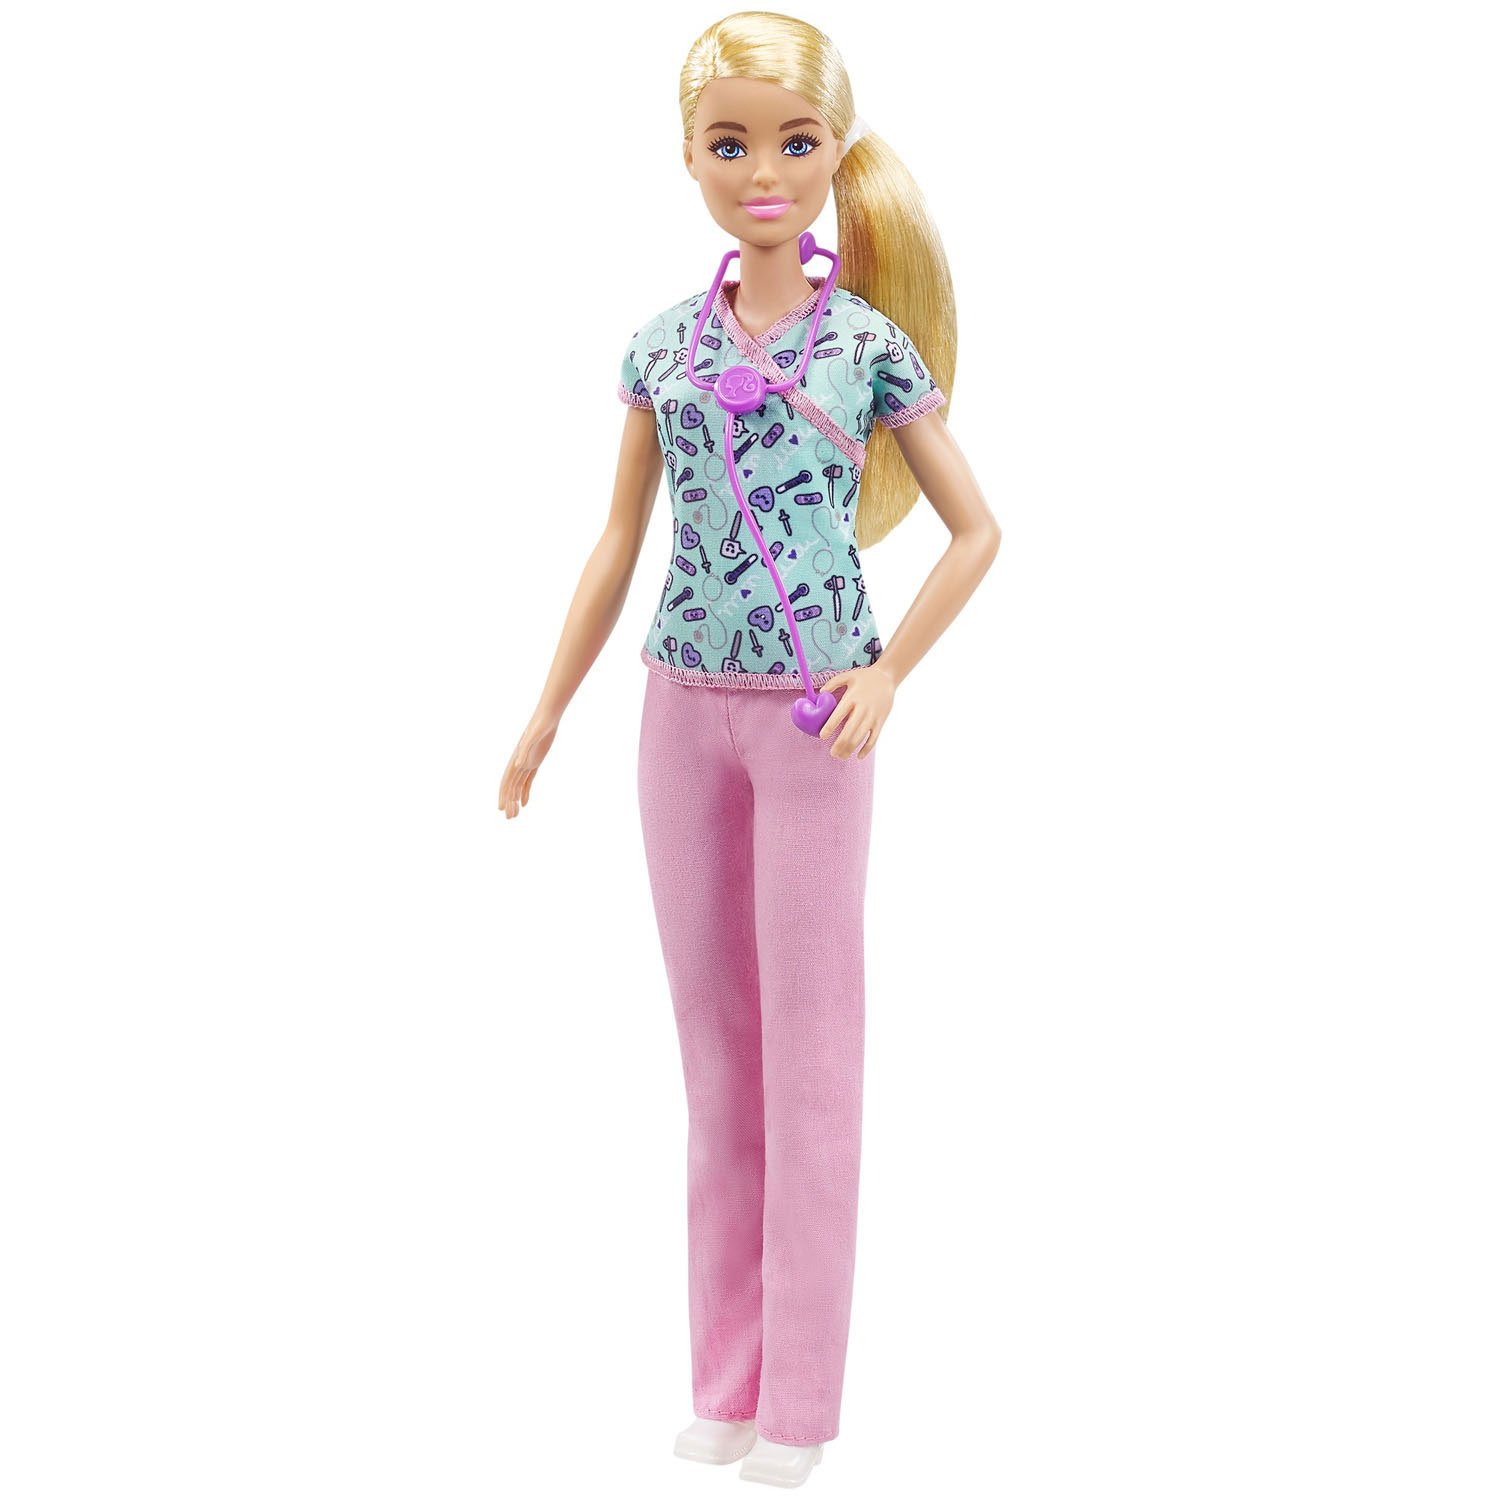 B.C. stormloop passen Barbie Nurse | Thimble Toys